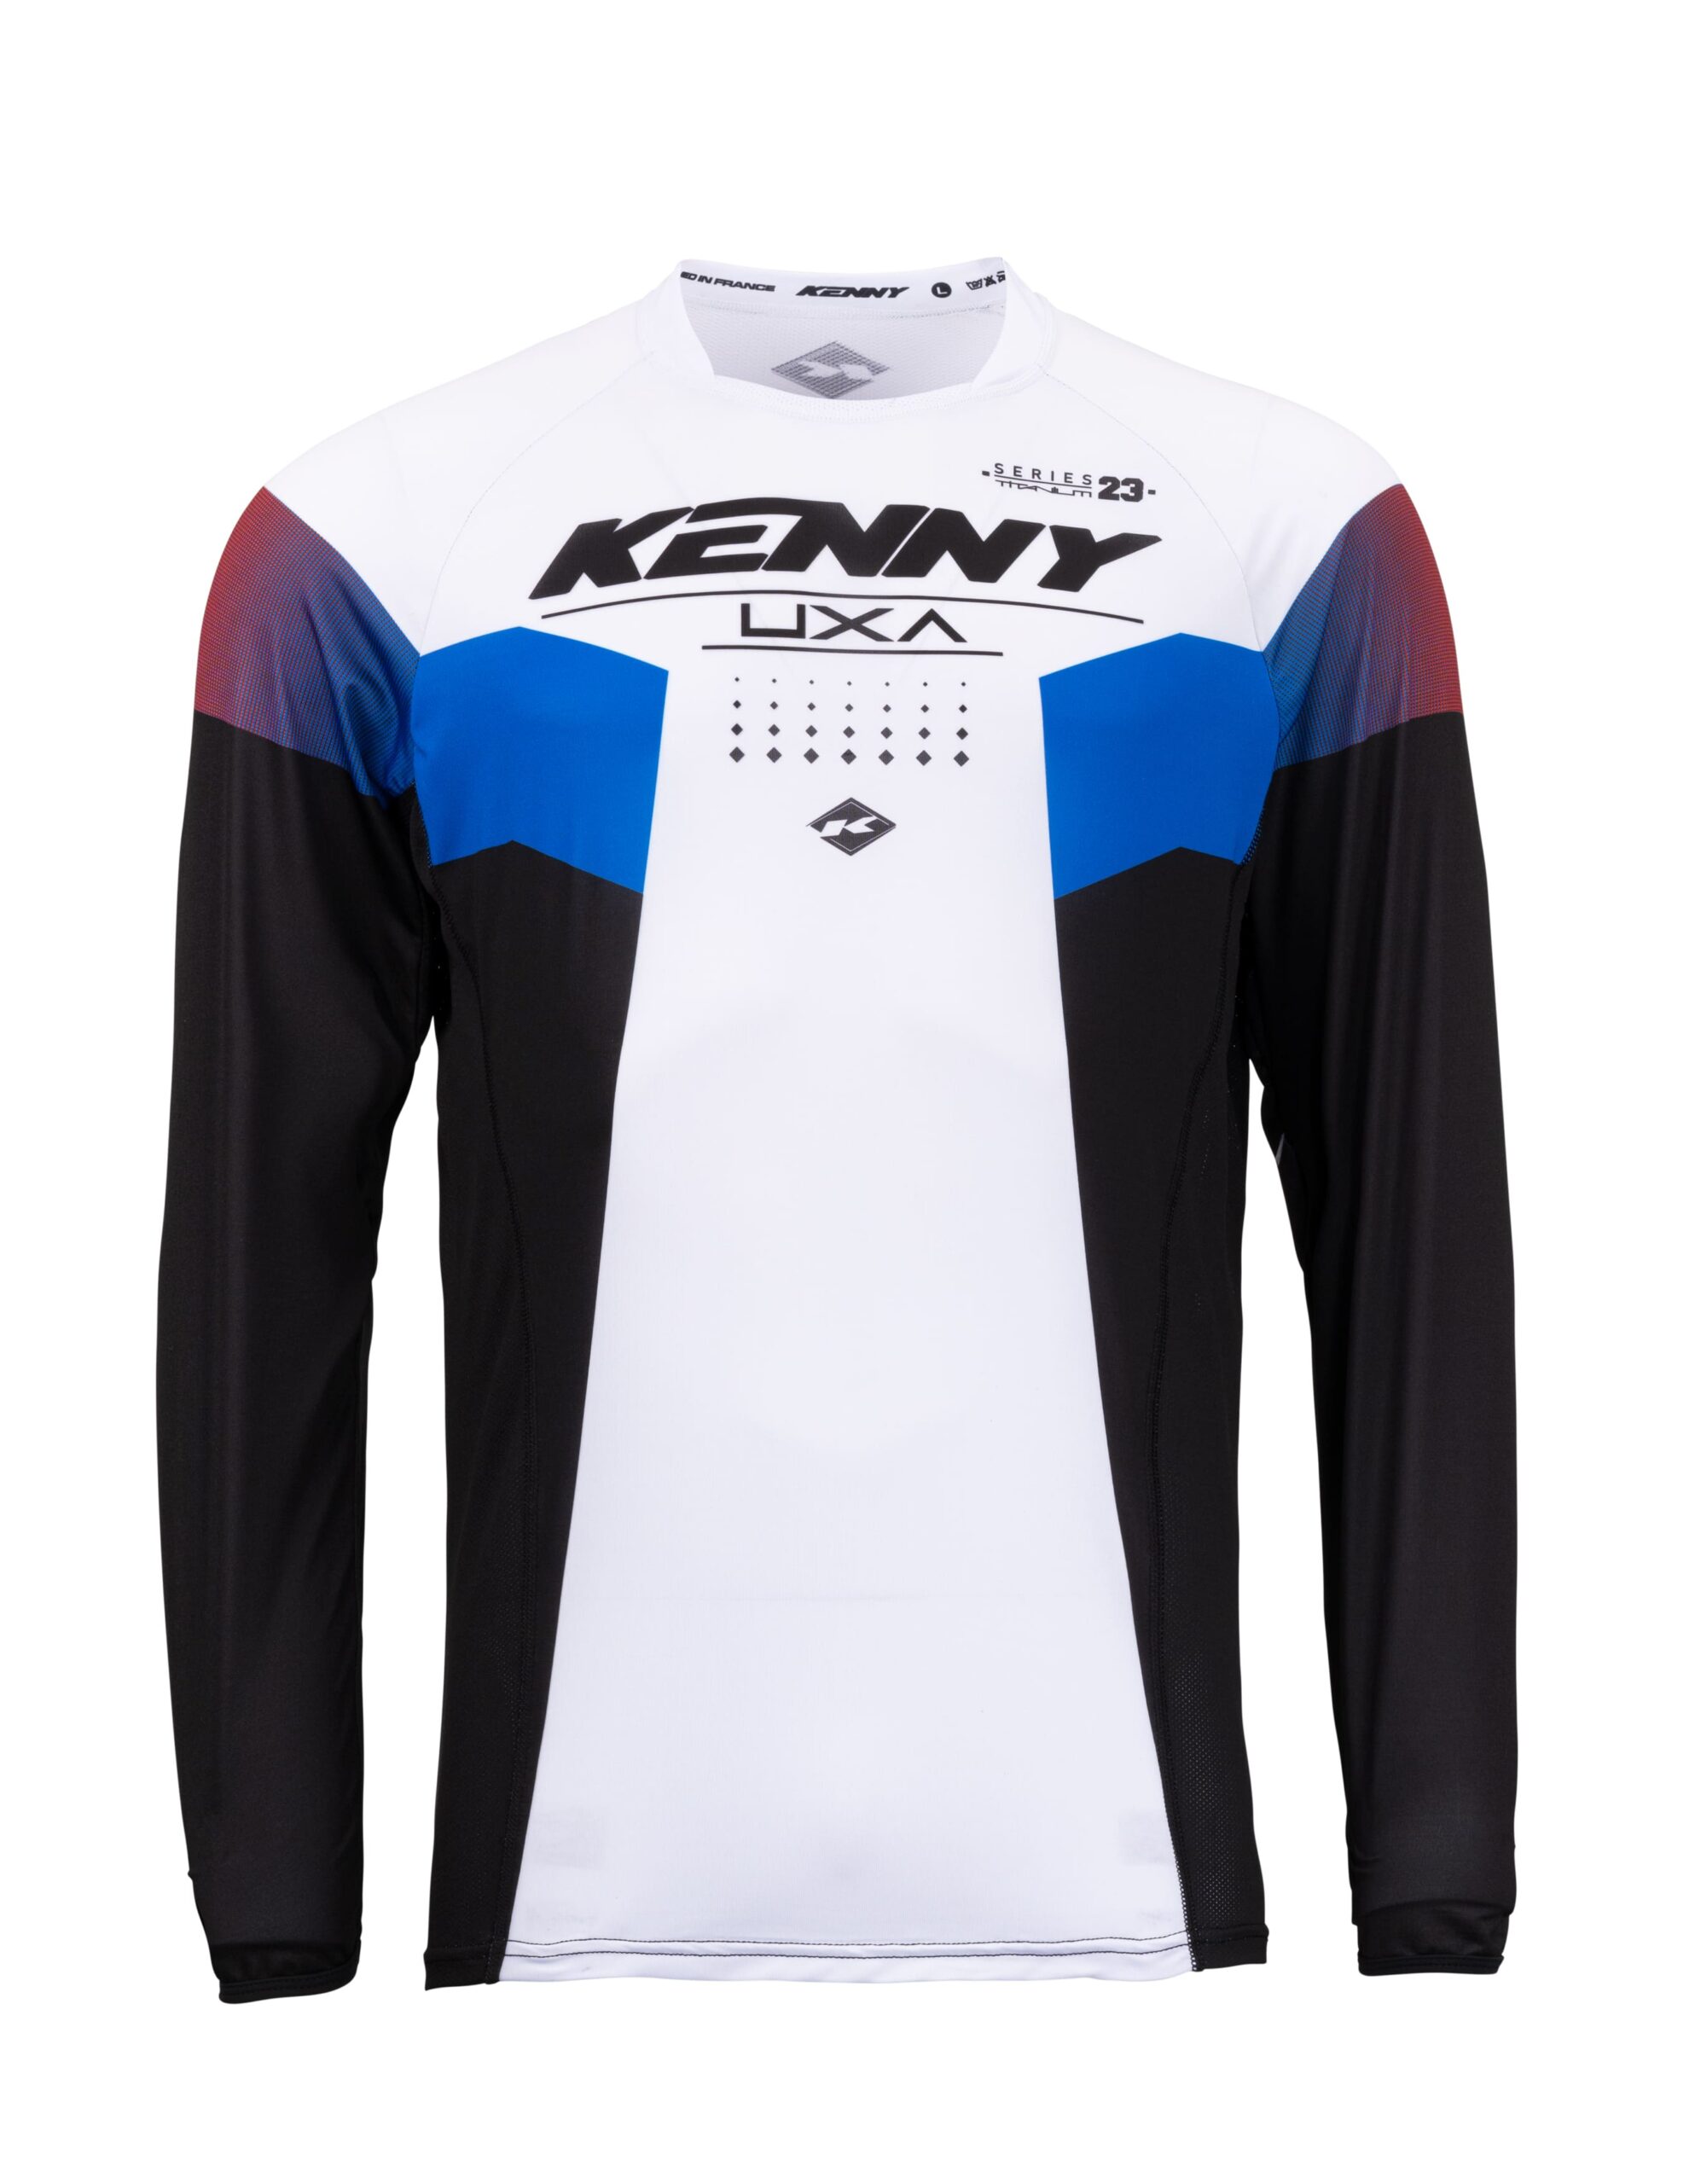 maillot_motocross_kenny_titanium_black_white (12)